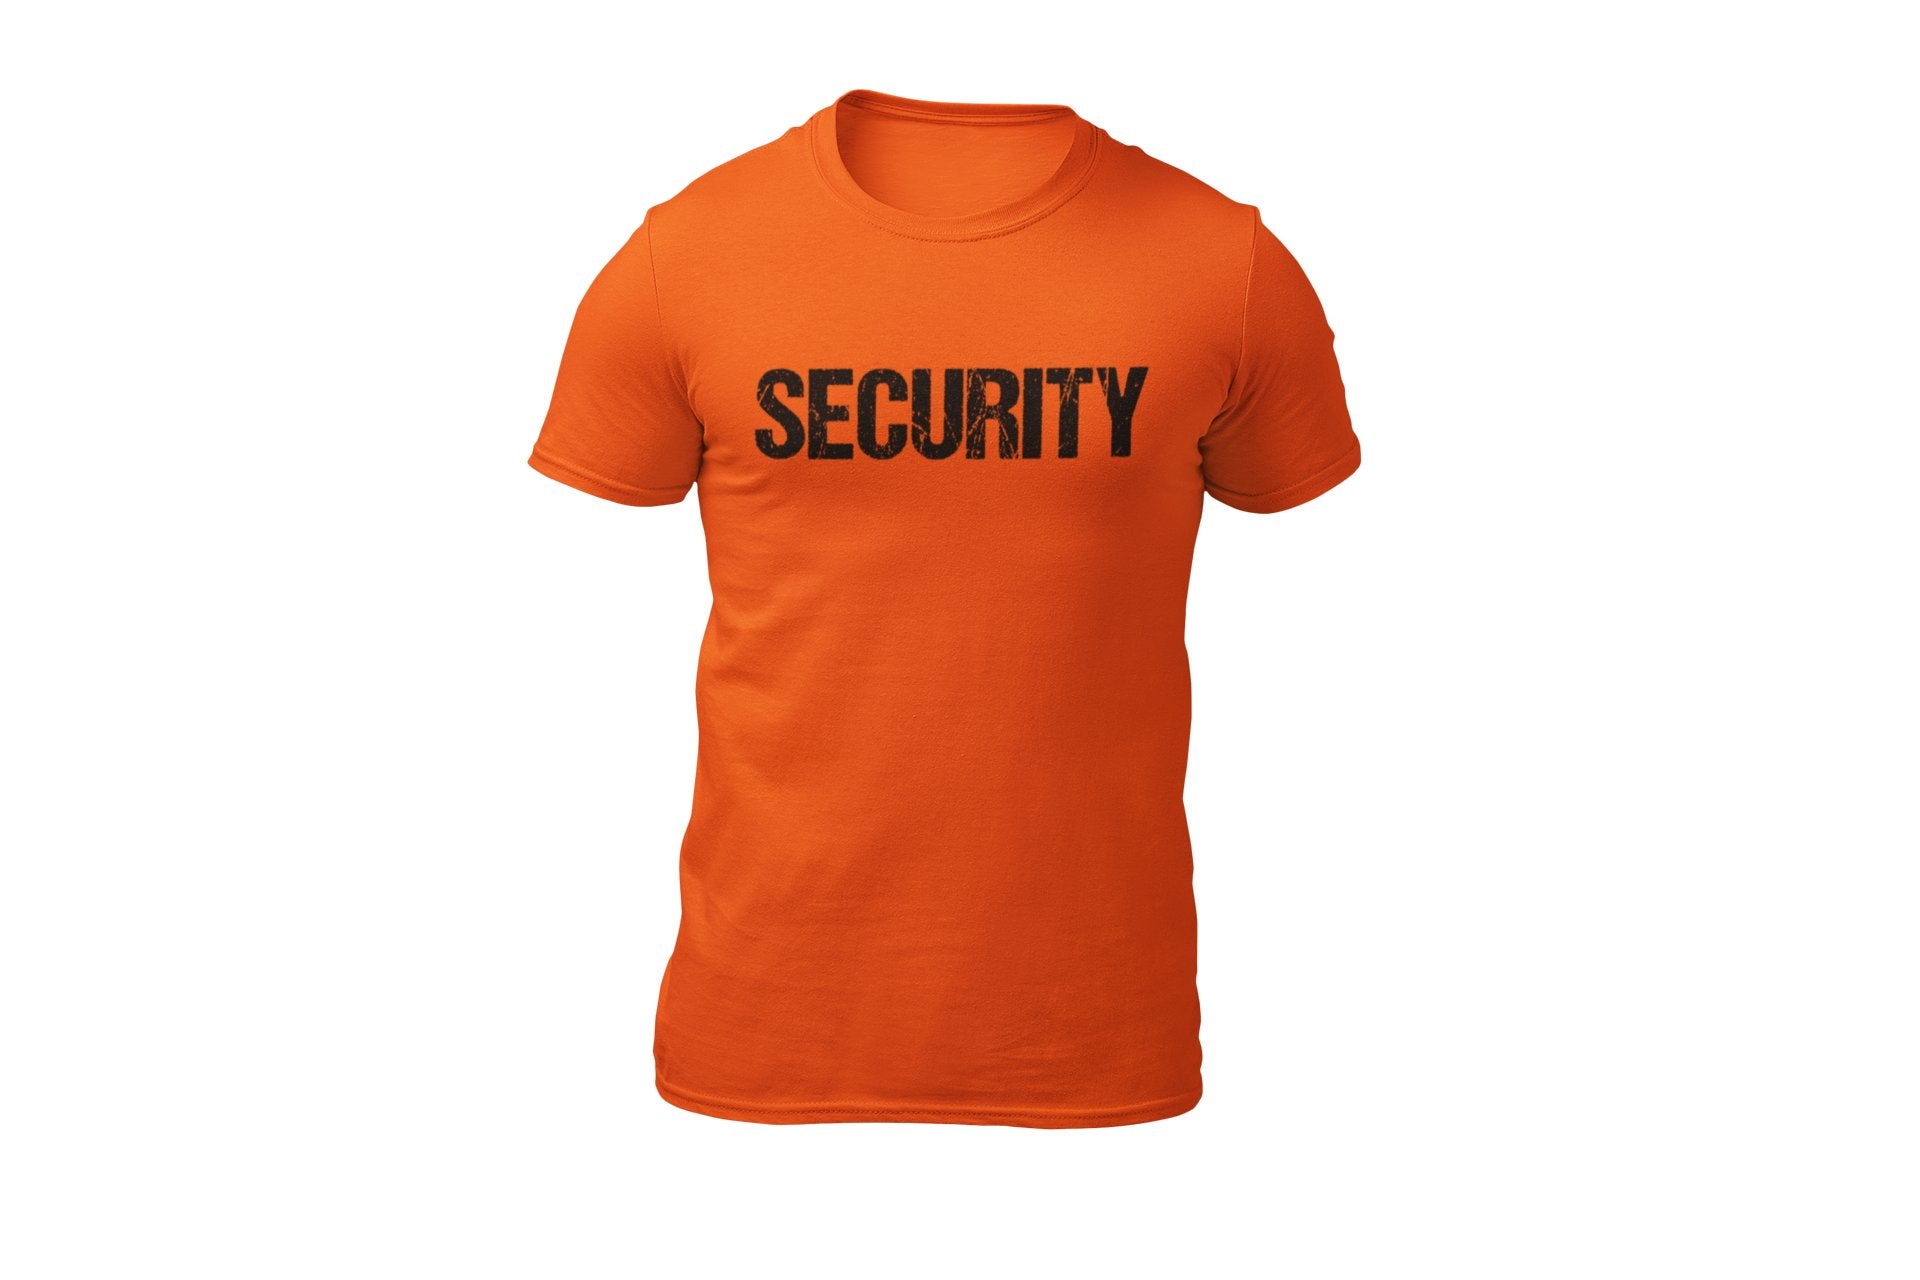 Men's Distressed Security Tee Front & Back Print  (Safety Orange,Black)